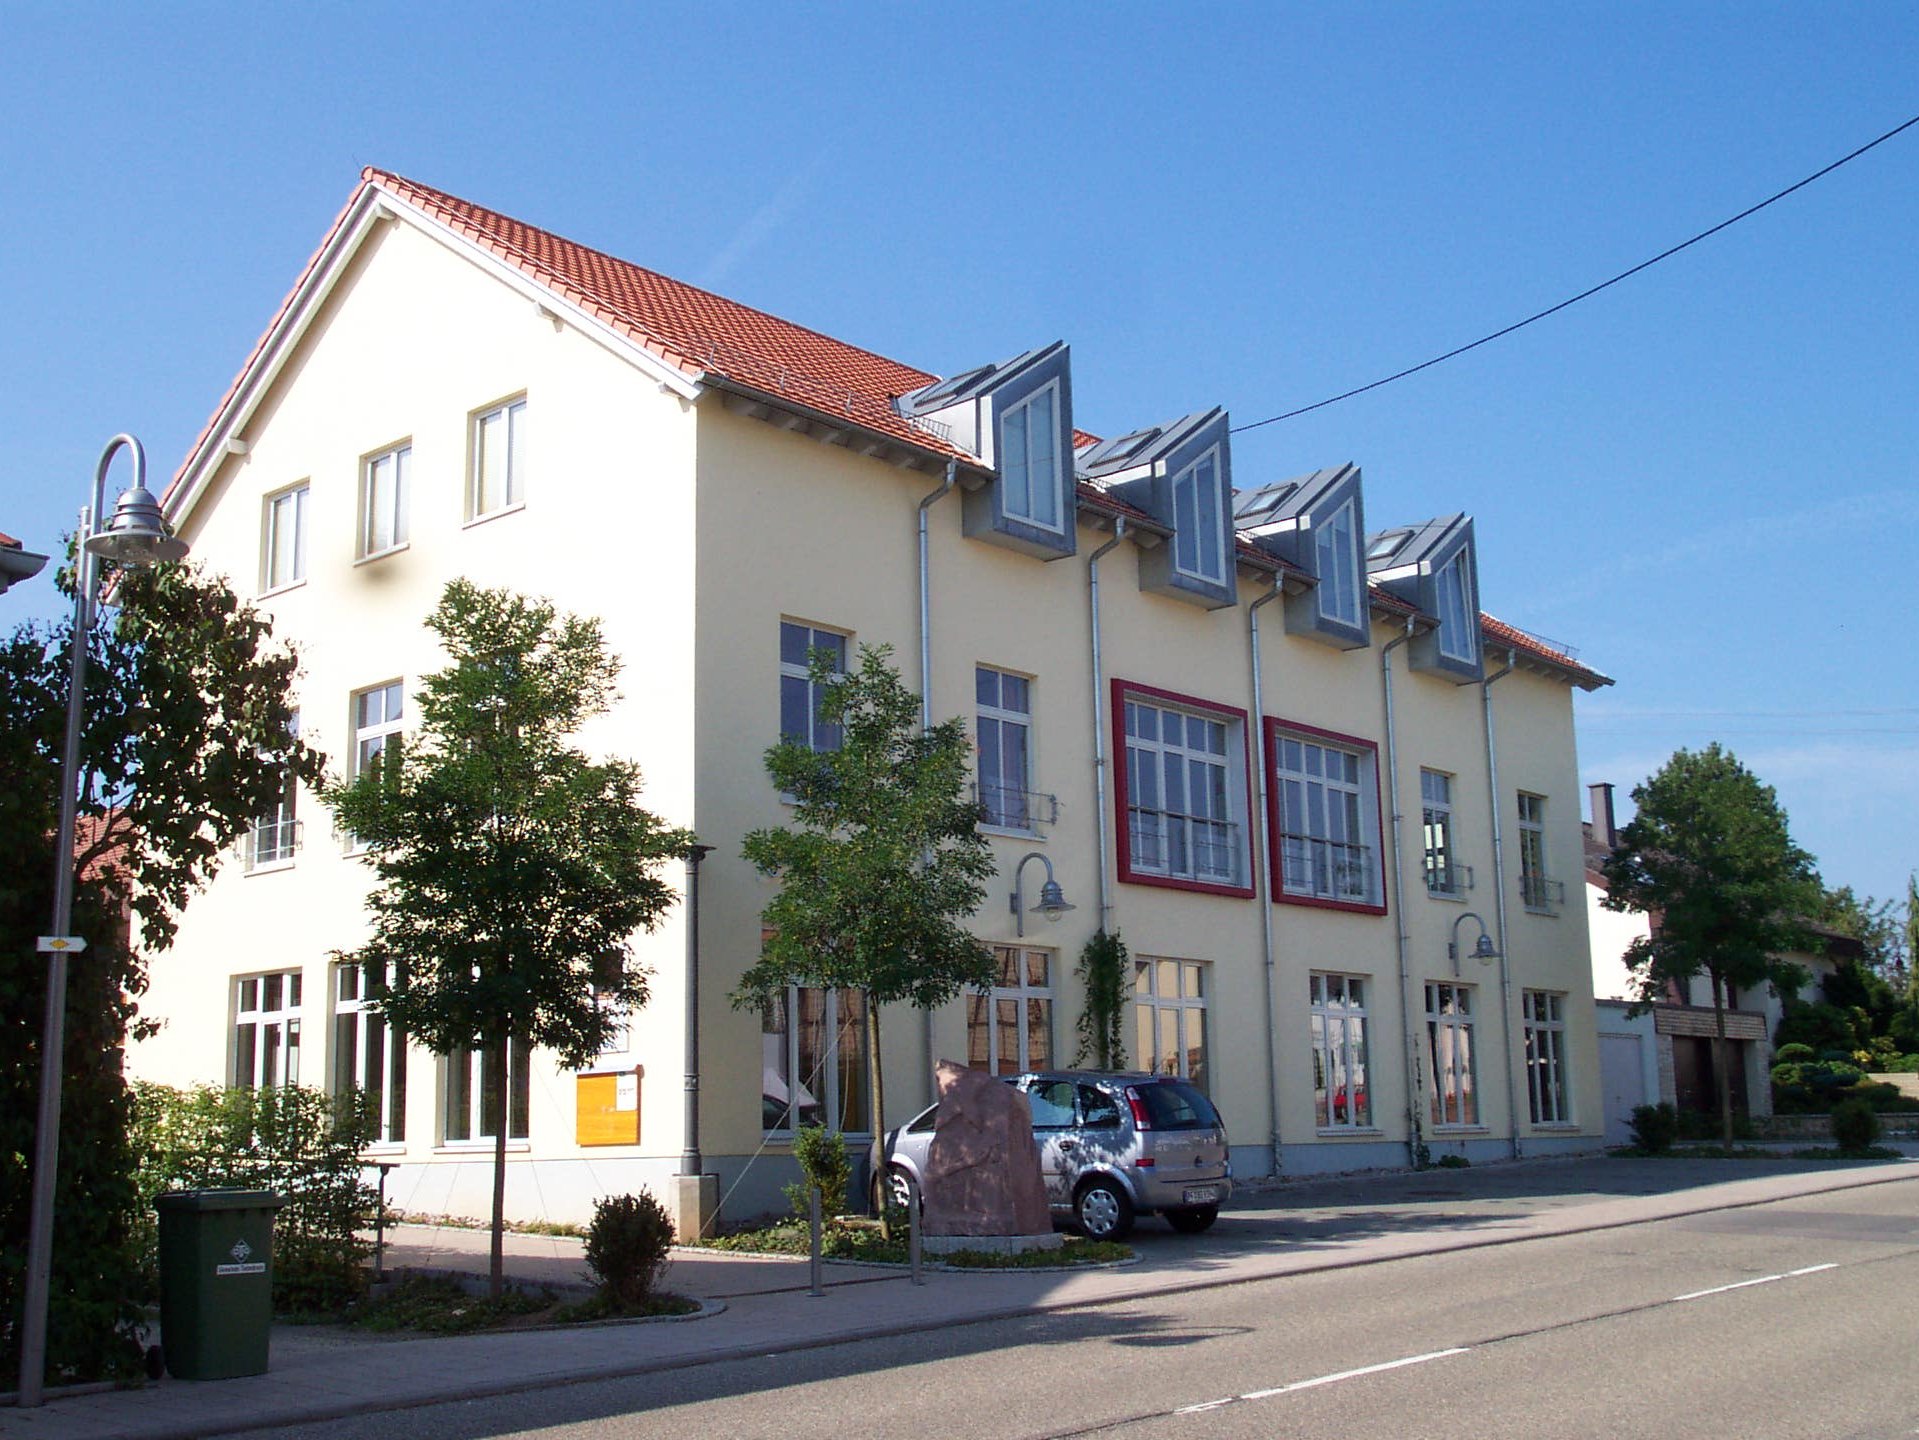 Kindertagesstätte Kuckuckshaus im Bürgerhaus Lehningen